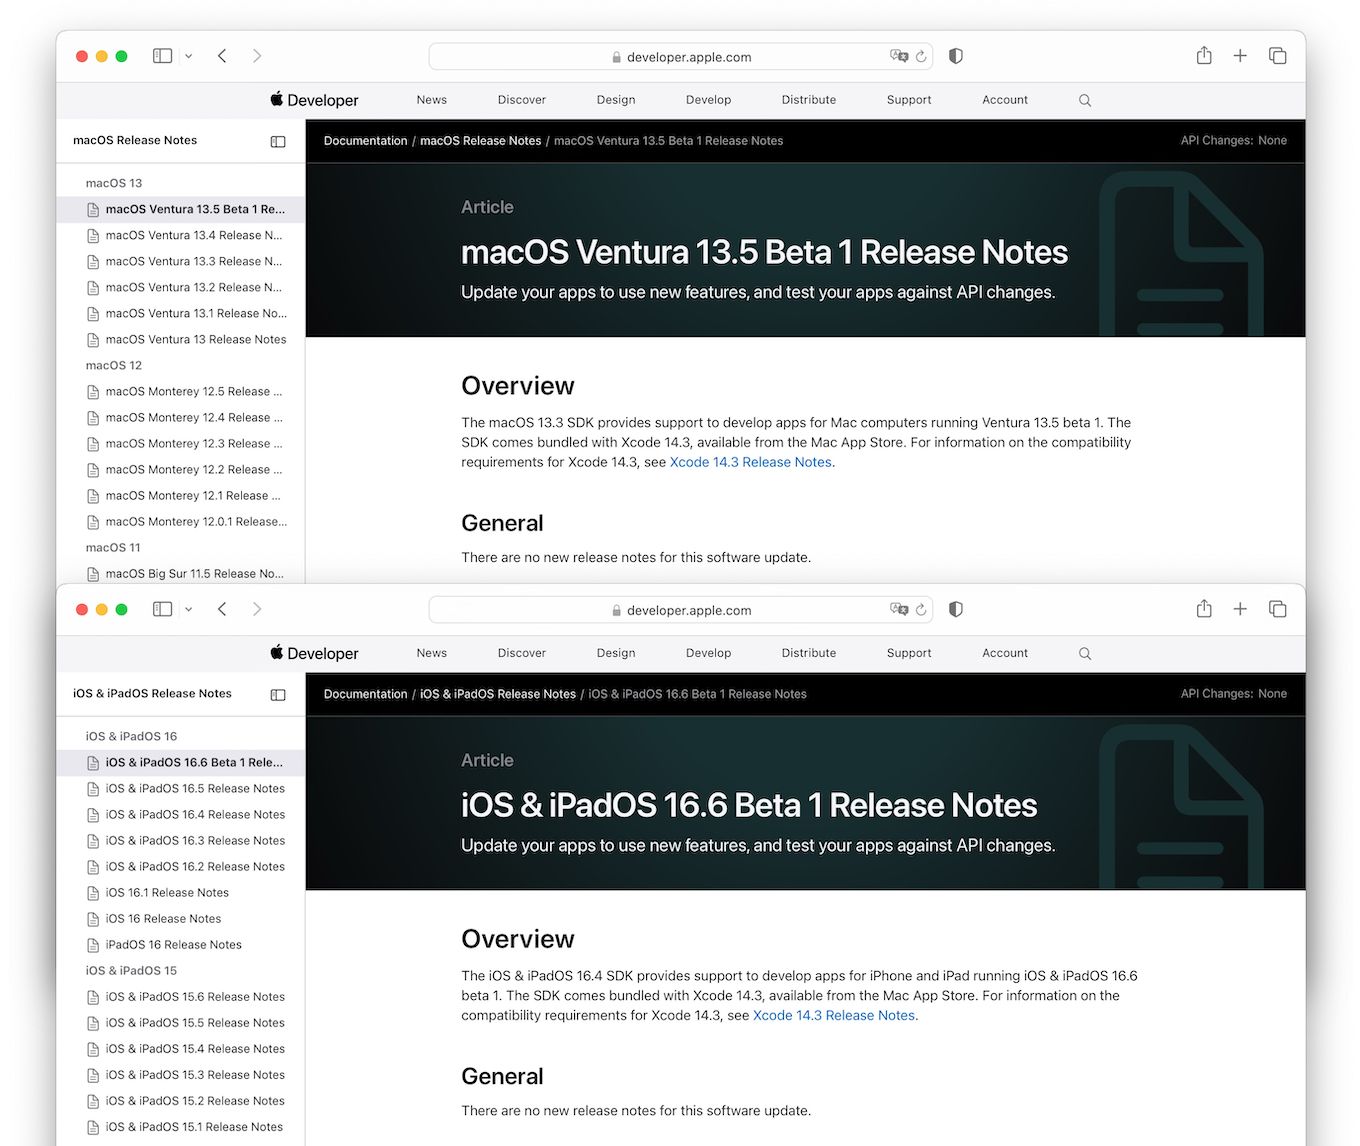 macOS Ventura 13.5 Beta 1 Release Notes